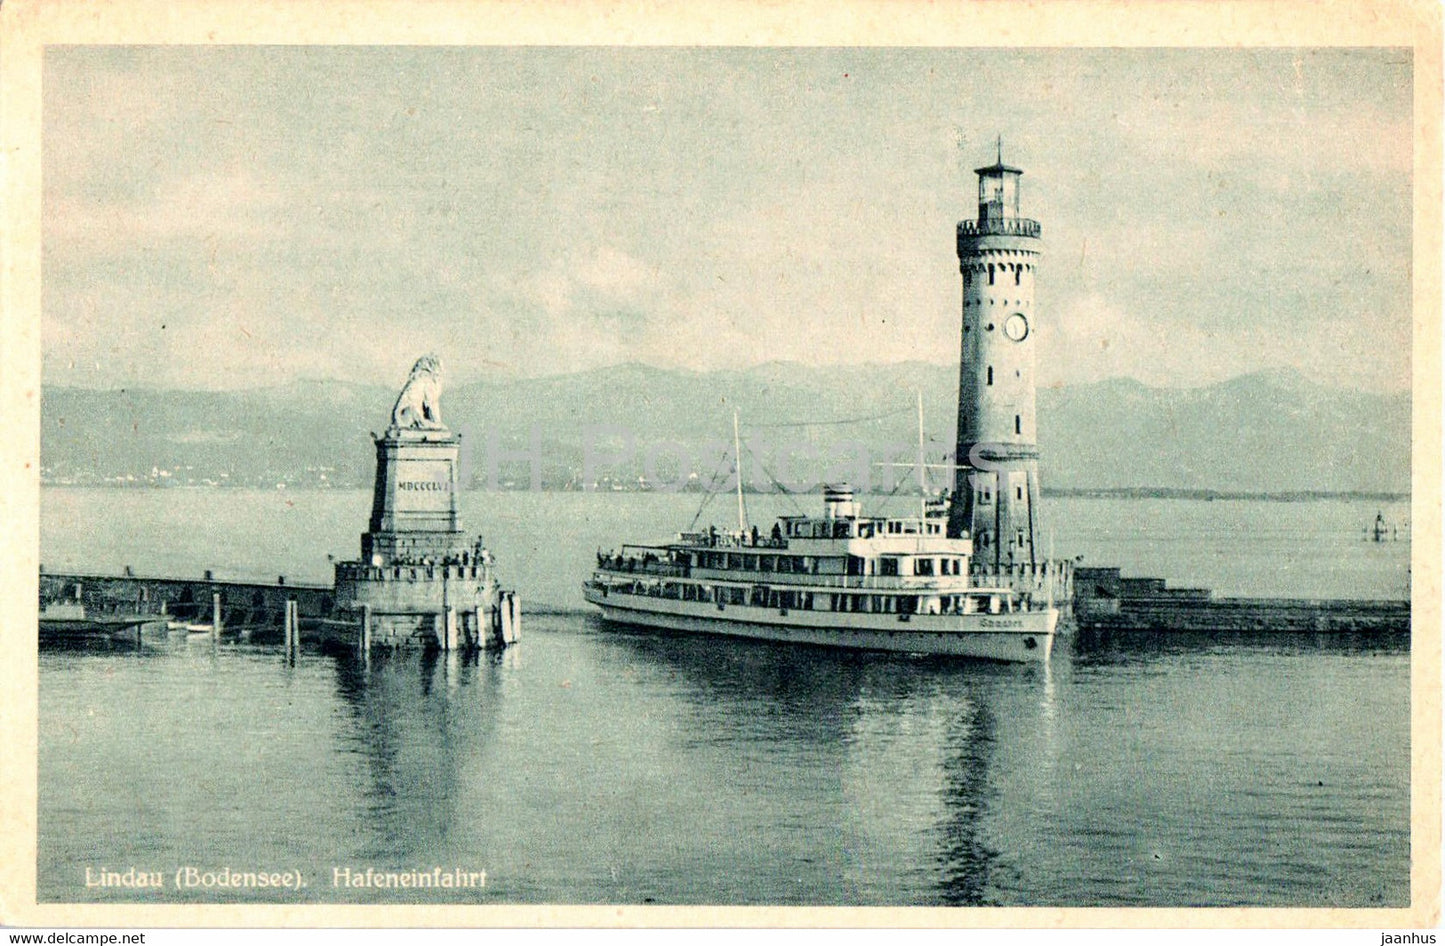 Lindau - Bodensee - Hafeneifahrt - lighthouse - port - ship - old postcard - Germany - unused - JH Postcards